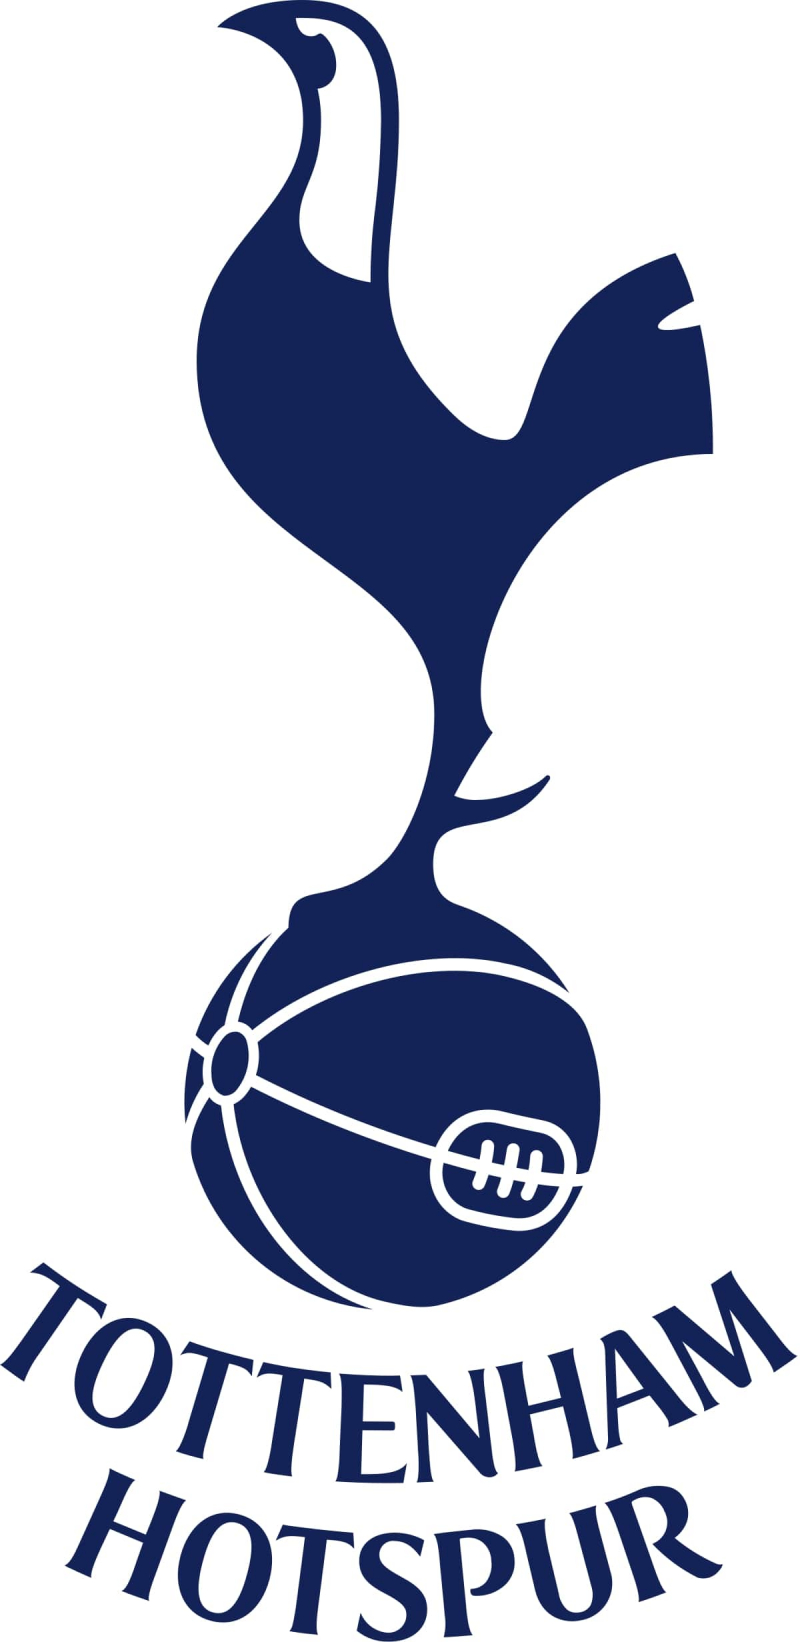 Logo Tottenham Hotspur Football Club - Wikipedia